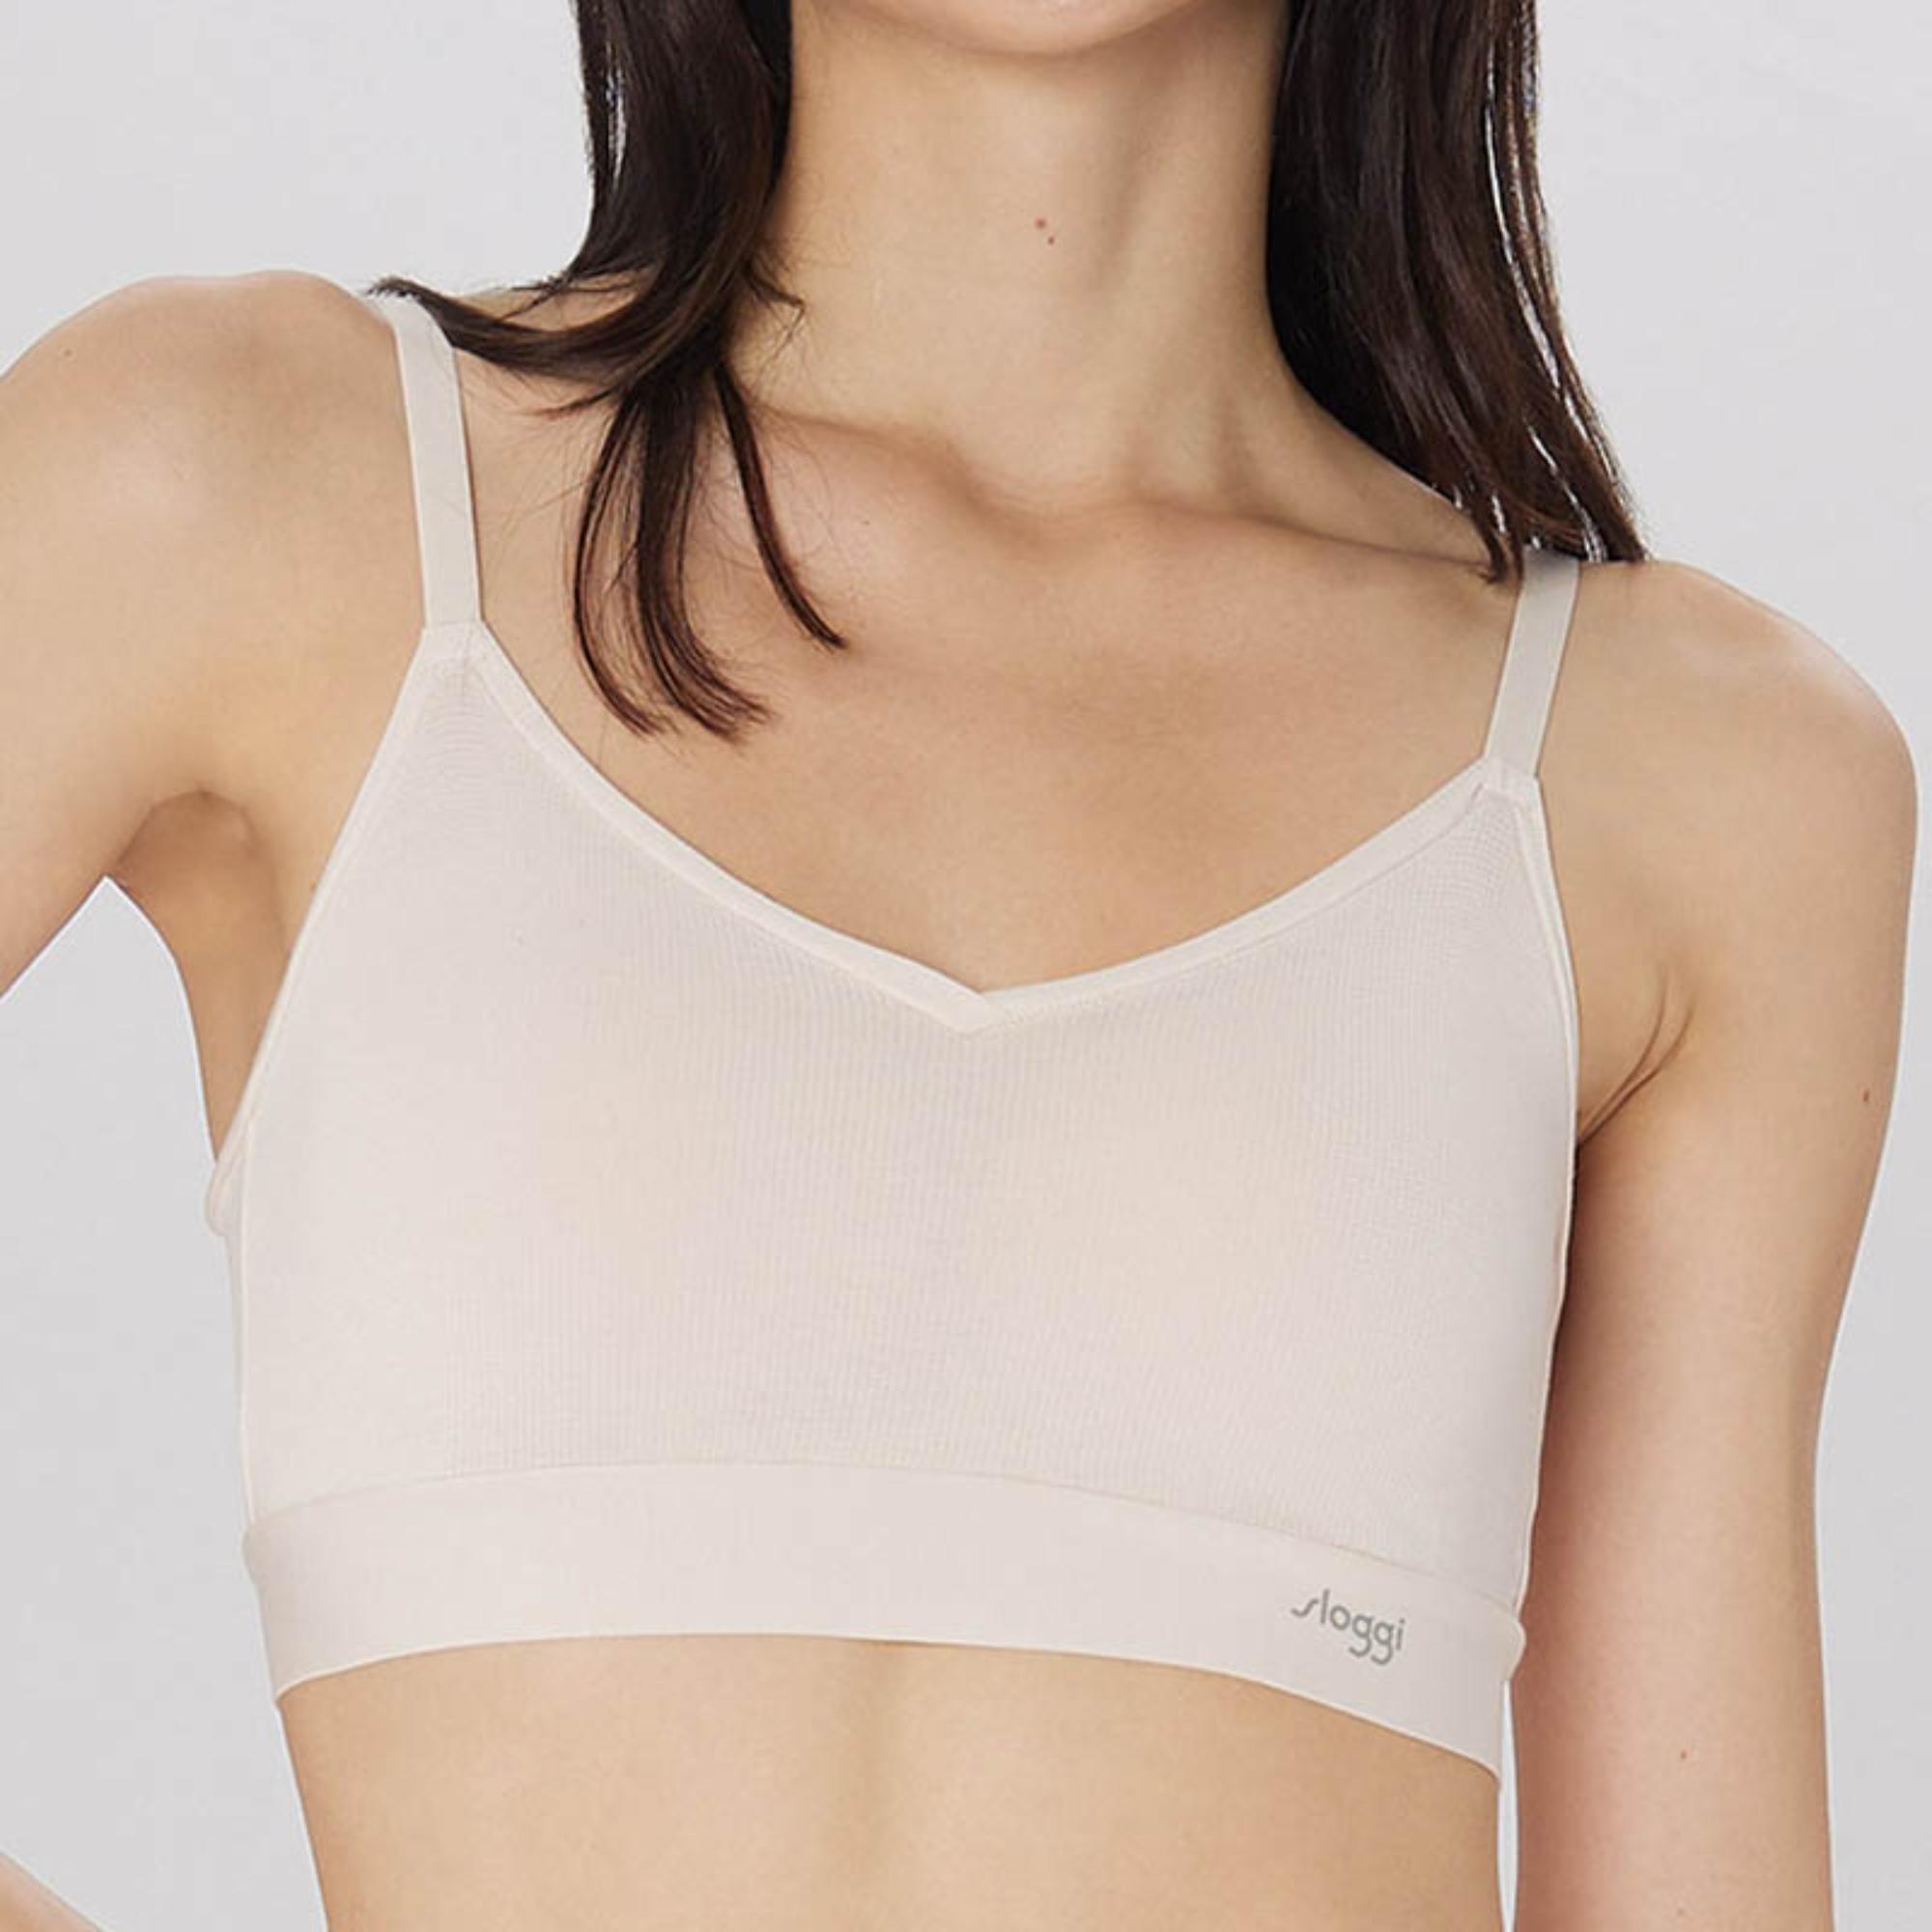 Sloggi Women's Double Comfort Top Bra Size 30 White 